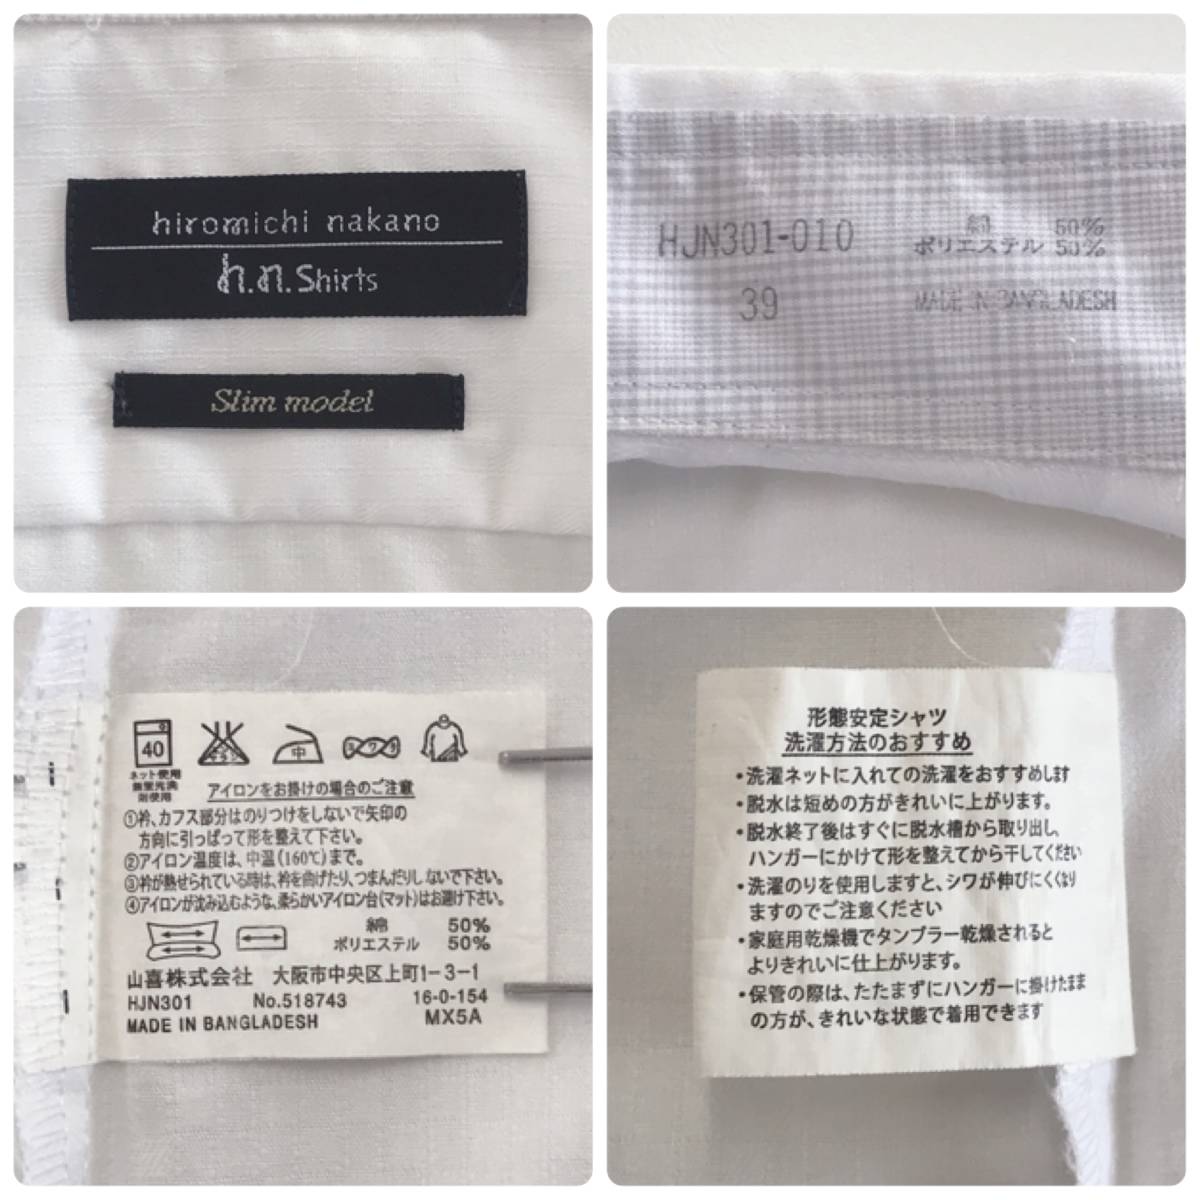 X348 hiromichinakano ヒロミチナカノ メンズ トップス シャツ 半袖 ホワイト 白 綿素材含 シンプル 上品 オフィススタイリッシュルックの画像10